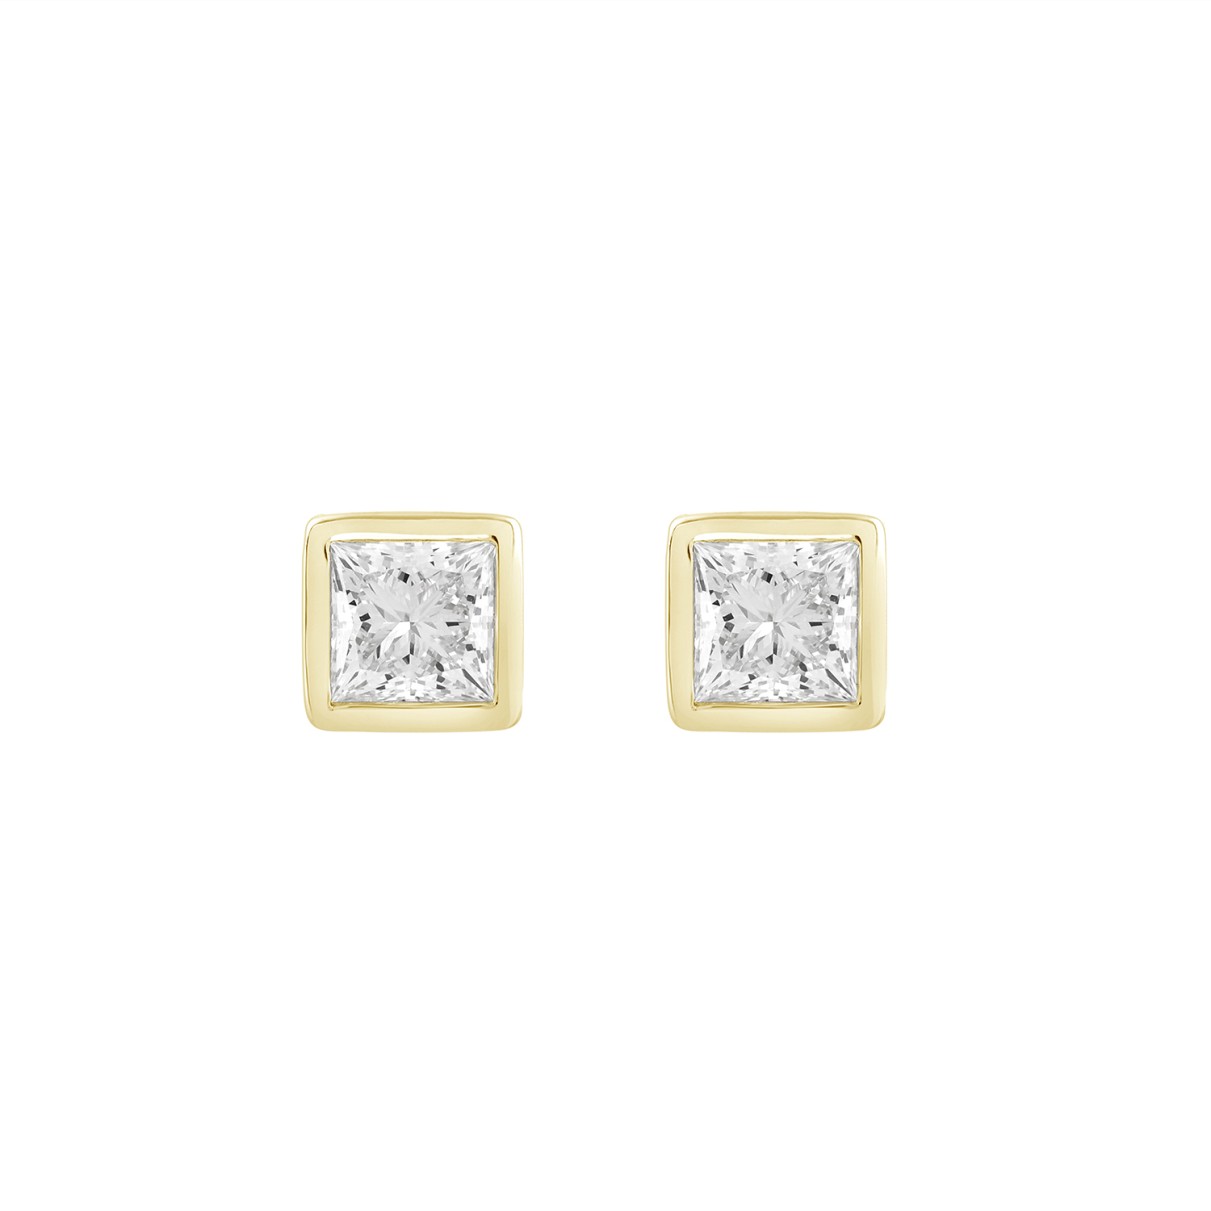 LADIES SOLITAIRE EARRINGS 3CT PRINCESS DIAMOND 14K YELLOW GOLD